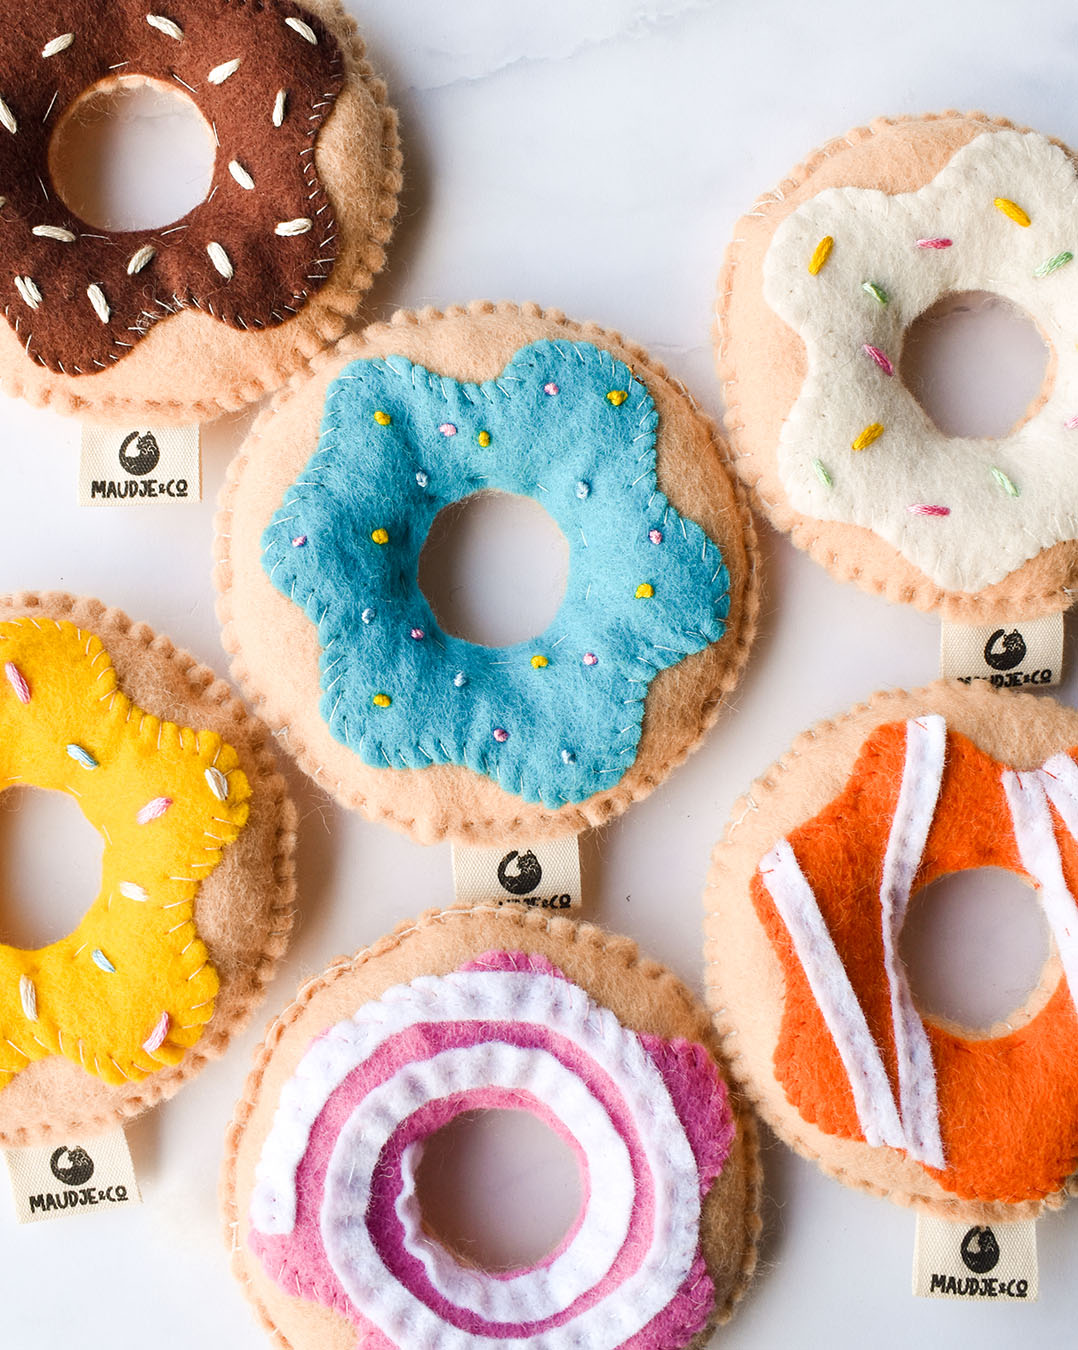 Donut - Chocolate sprinkles -  Kattenspeelgoed - donut, kattenkruid, speeltje - Door Maudje & Co